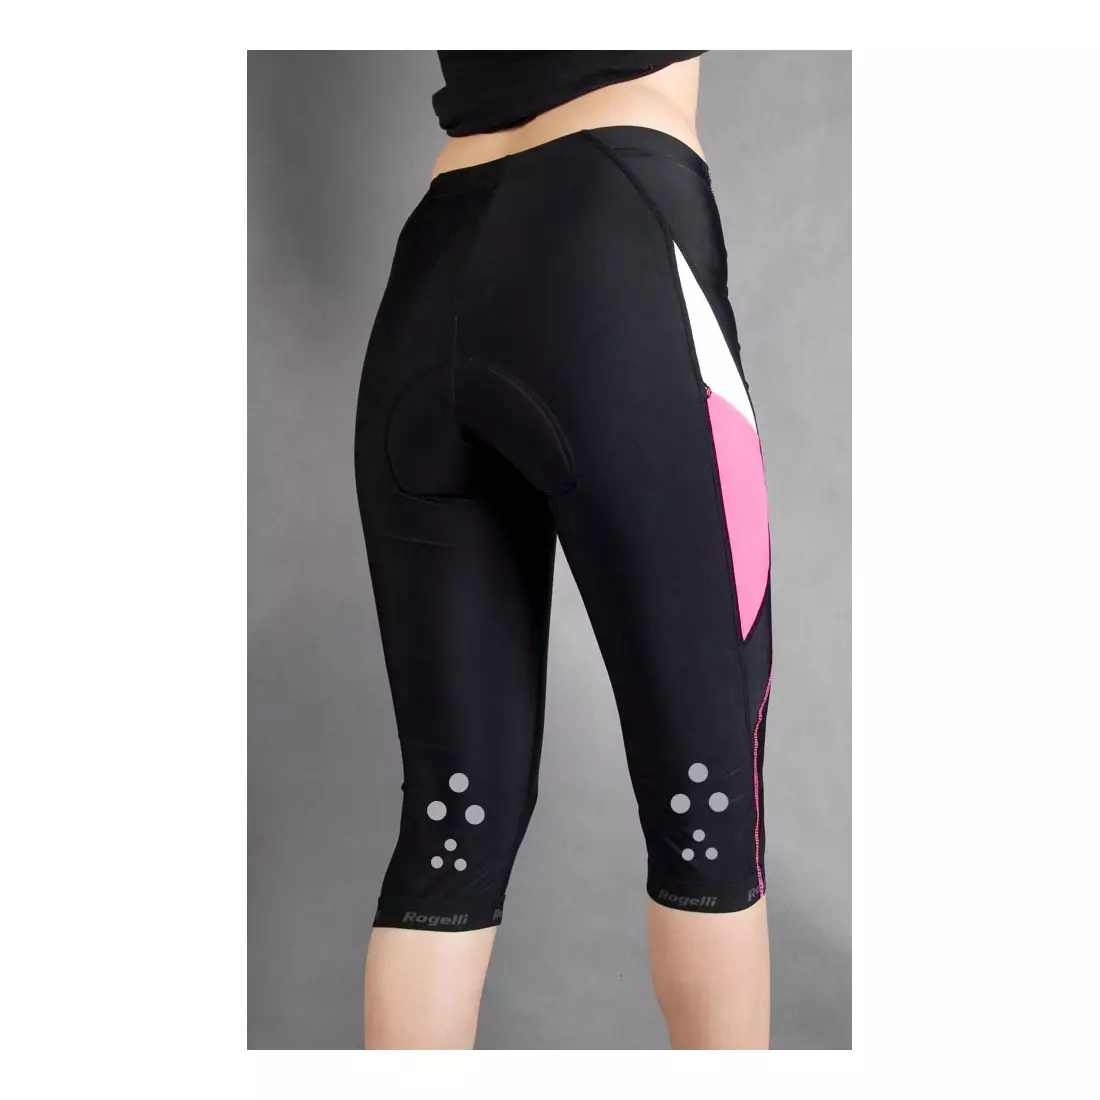 ROGELLI BAYLE - women's cycling shorts, 3/4 leg